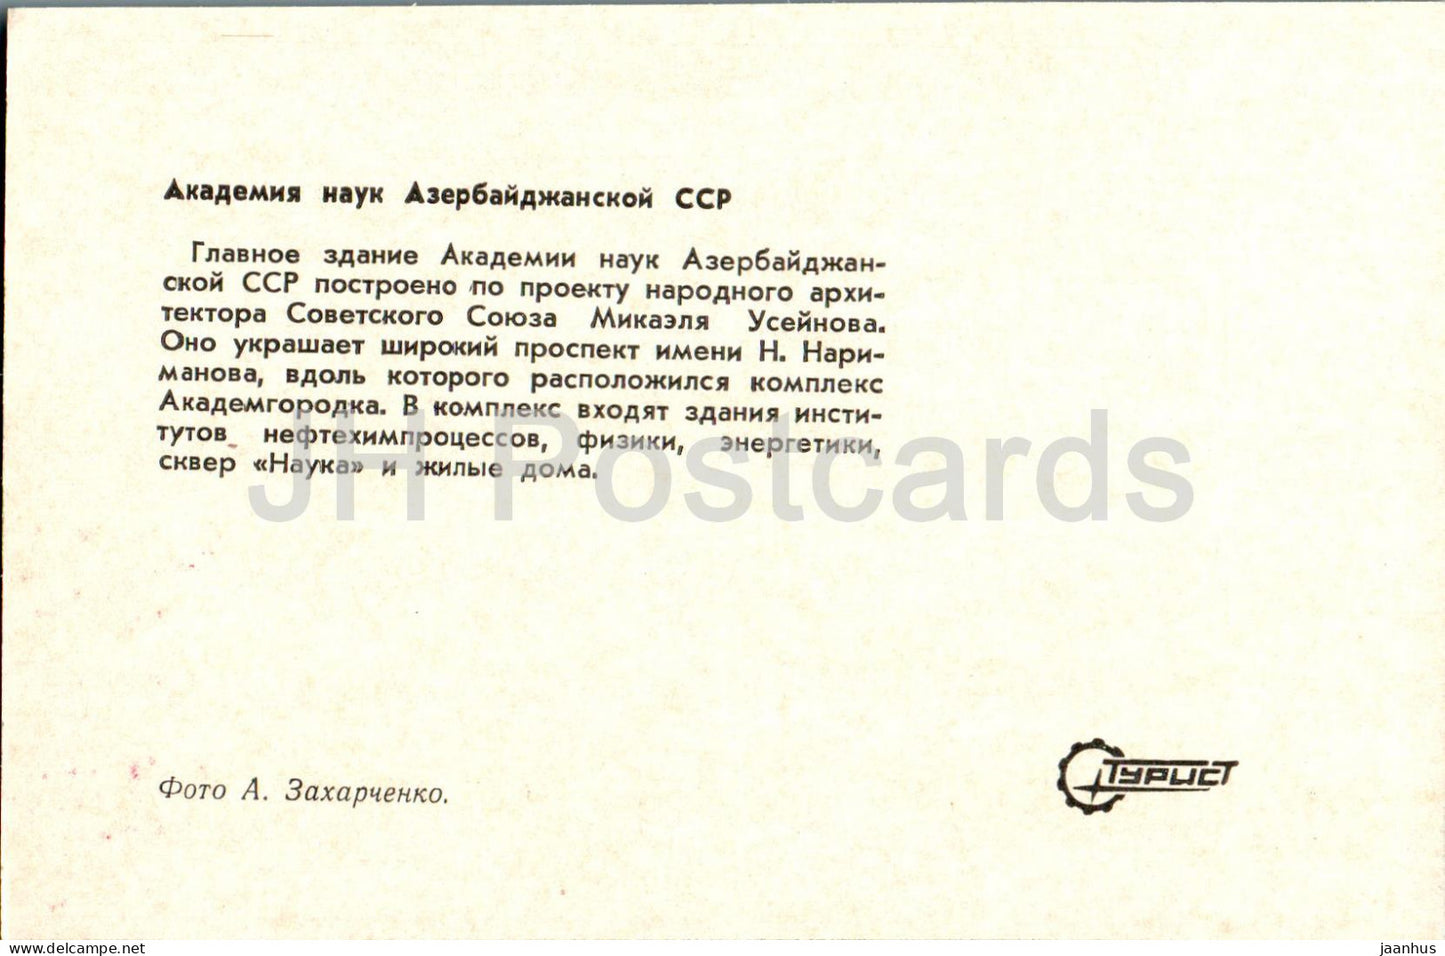 Bakou - Académie des sciences de la RSS d'Azerbaïdjan - 1974 - URSS d'Azerbaïdjan - inutilisé